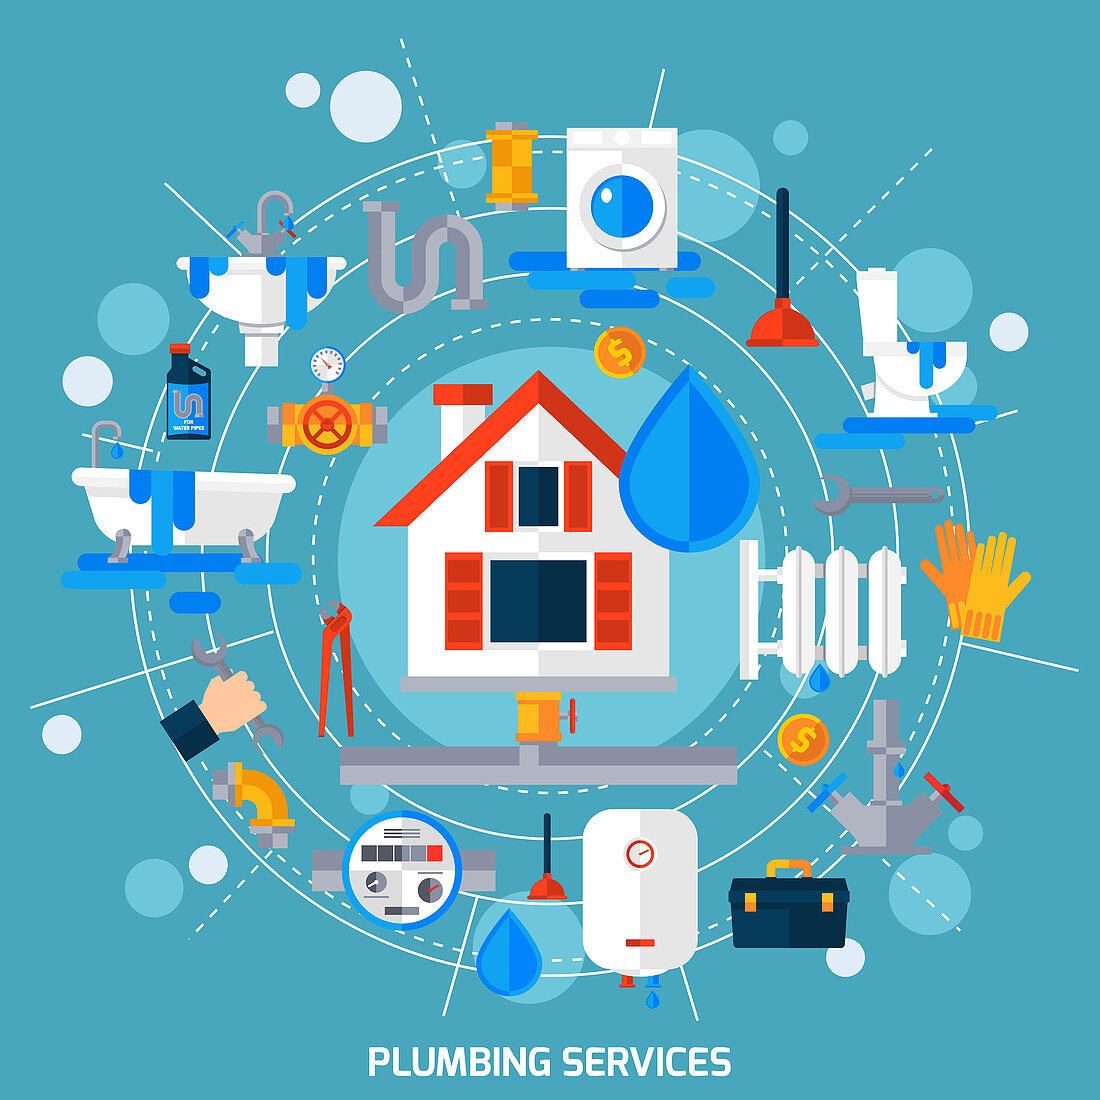 Plumbing services, illustration